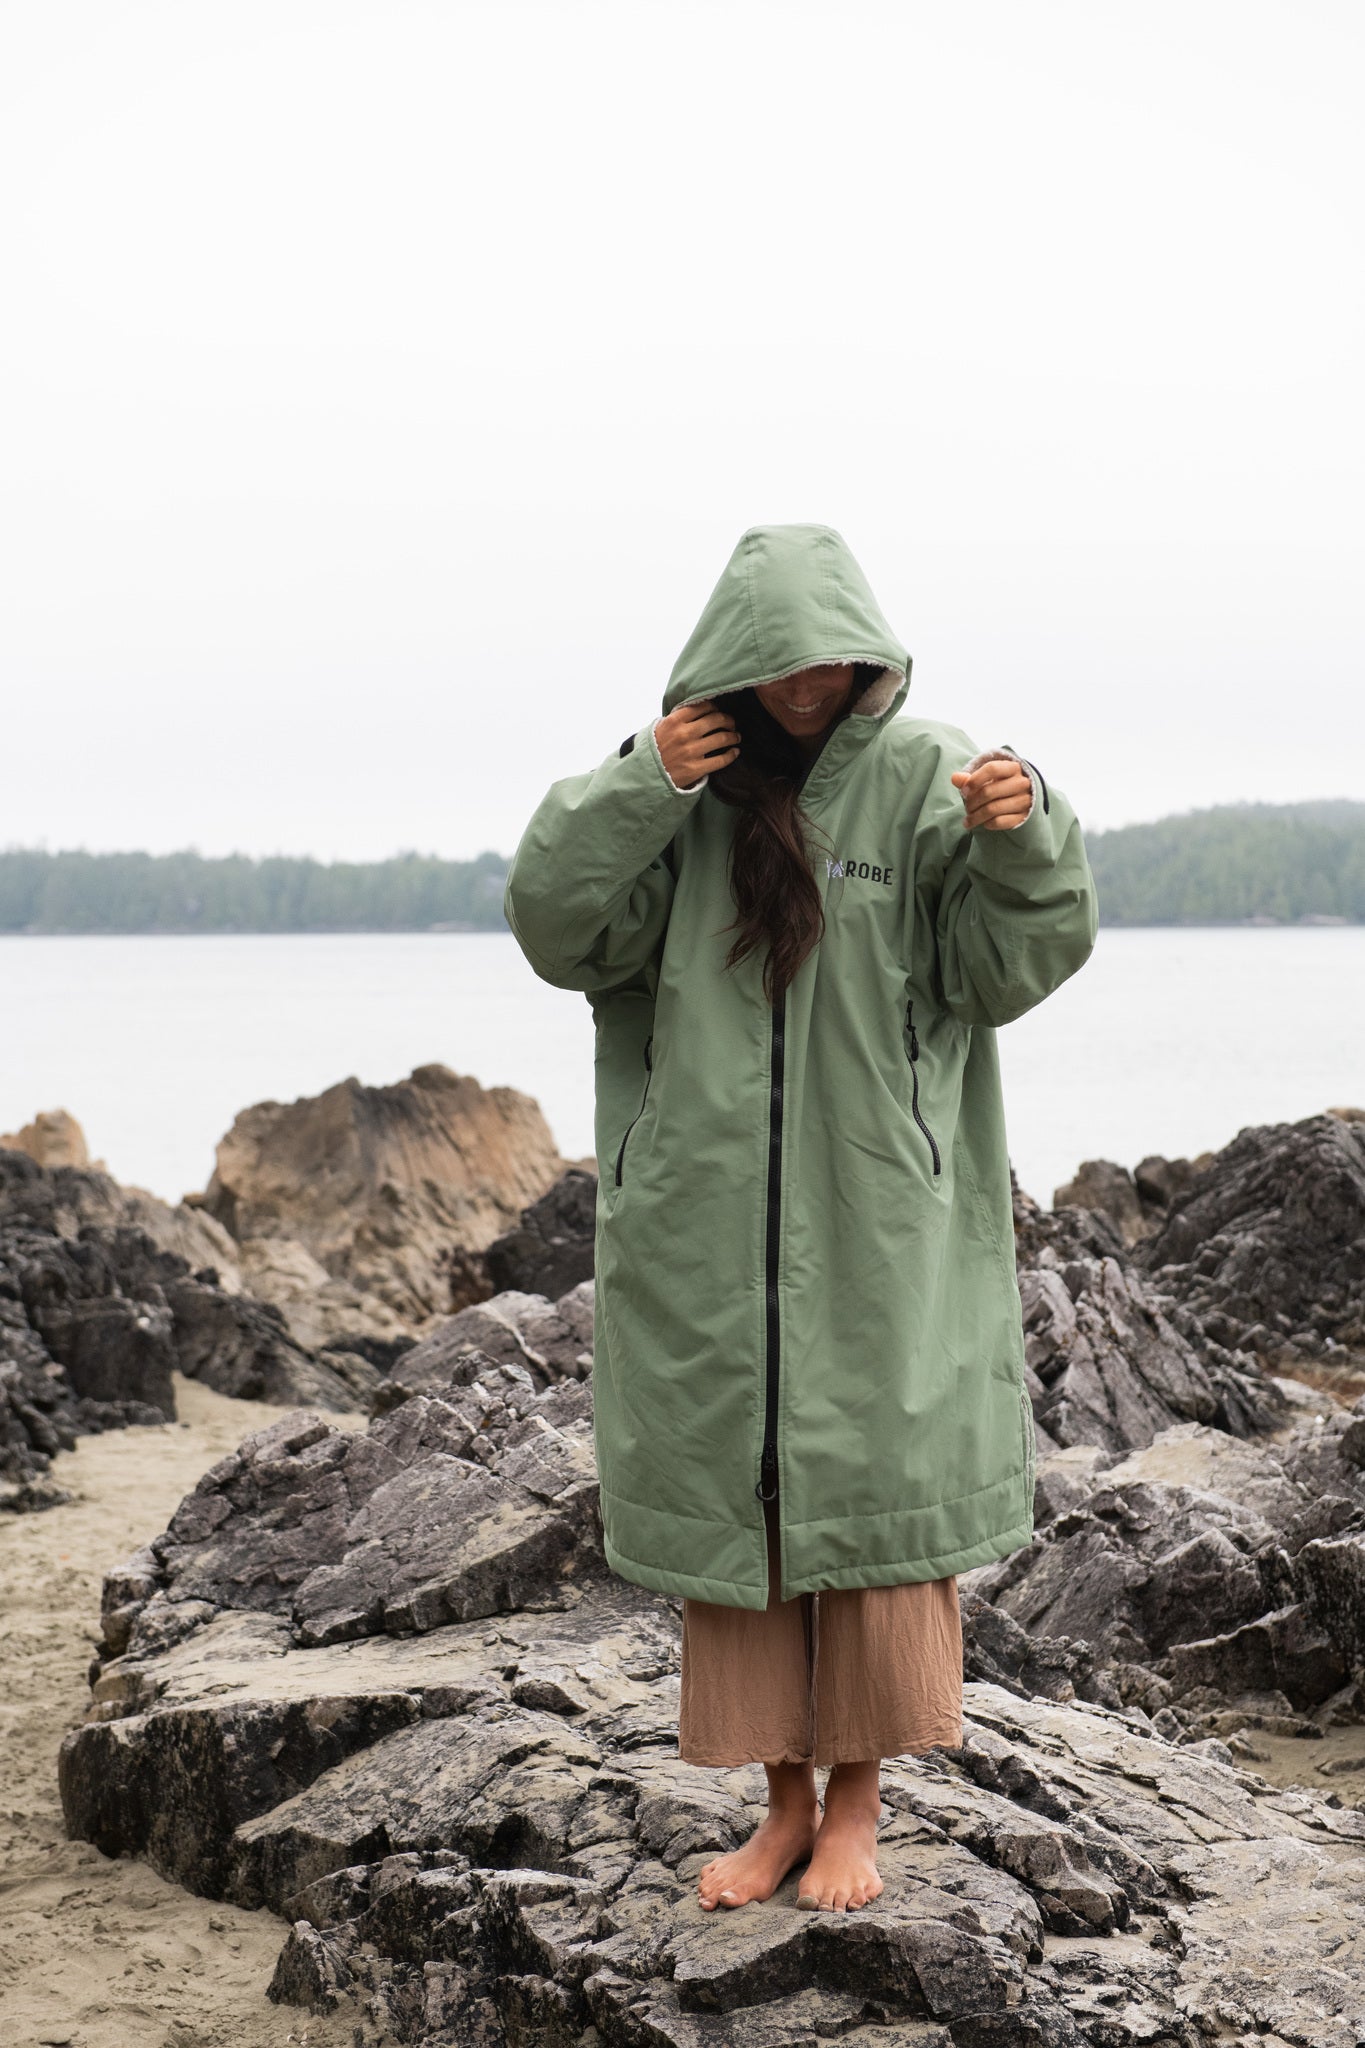 OURCAN Rain Suits for Men Fishing Rain Gear for Men Waterproof Lightweight Rain Coats for Men Waterproof with Hood and Pants (Black,M)